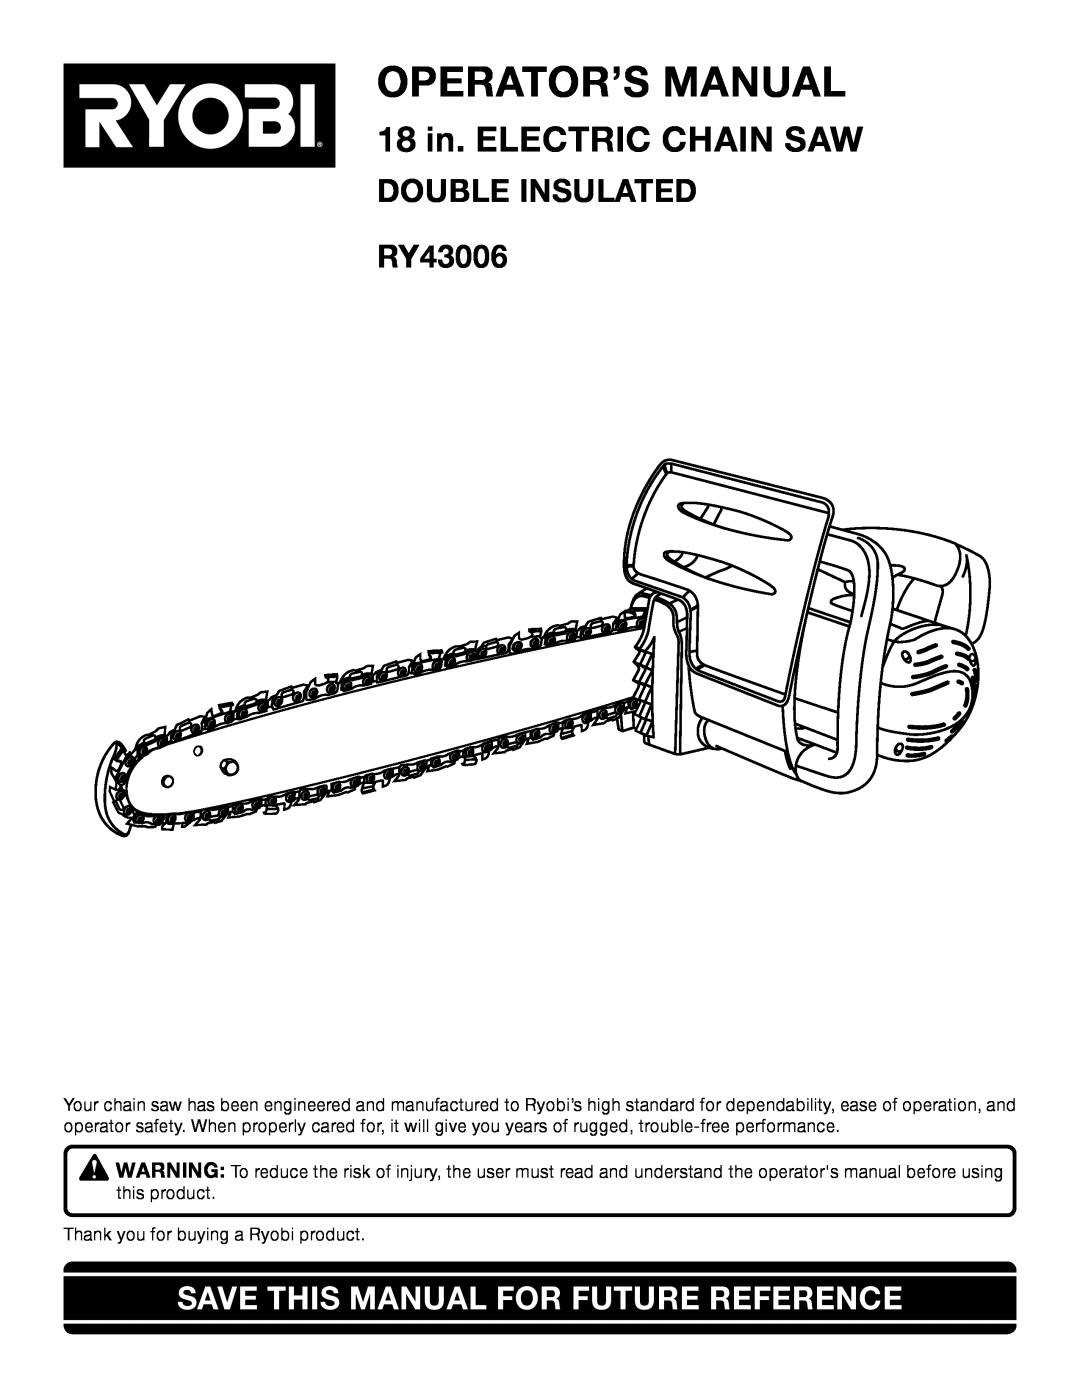 Ryobi manual Operator’S Manual, 18 in. ELECTRIC CHAIN SAW, DOUBLE INSULATED RY43006 